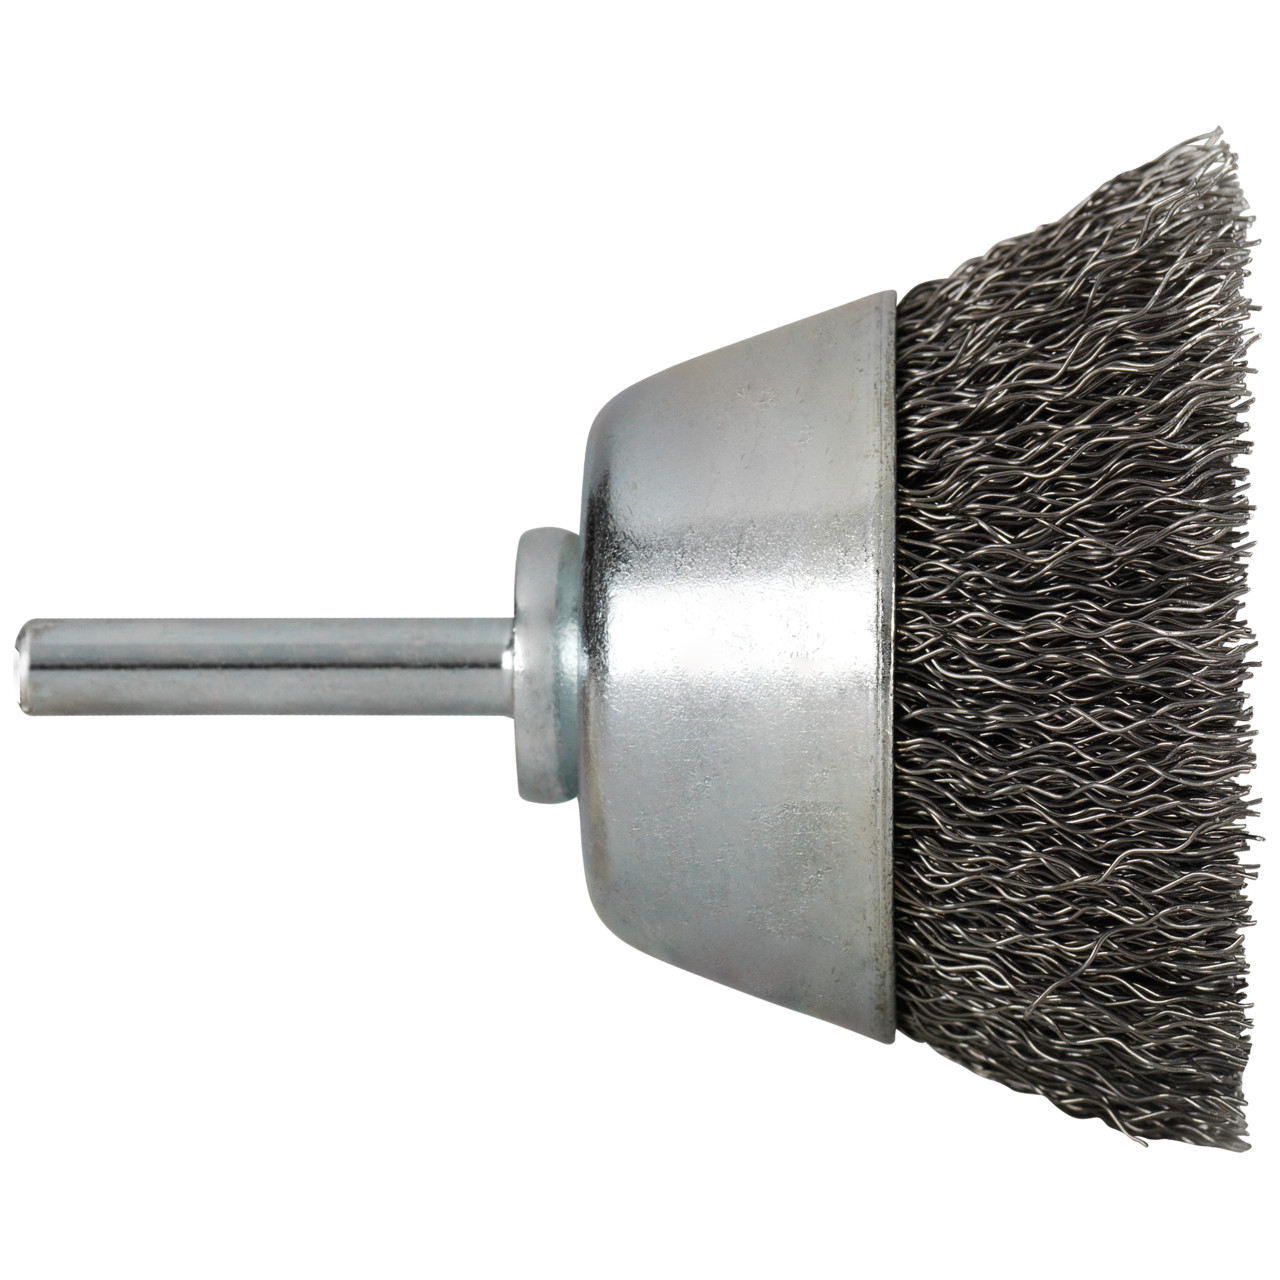 Tyrolit Spazzole a tazza DxLxH-GExI 70x15x25-6x30 Per acciaio, forma: 52TDW - (spazzole a tazza), Art. 34276013